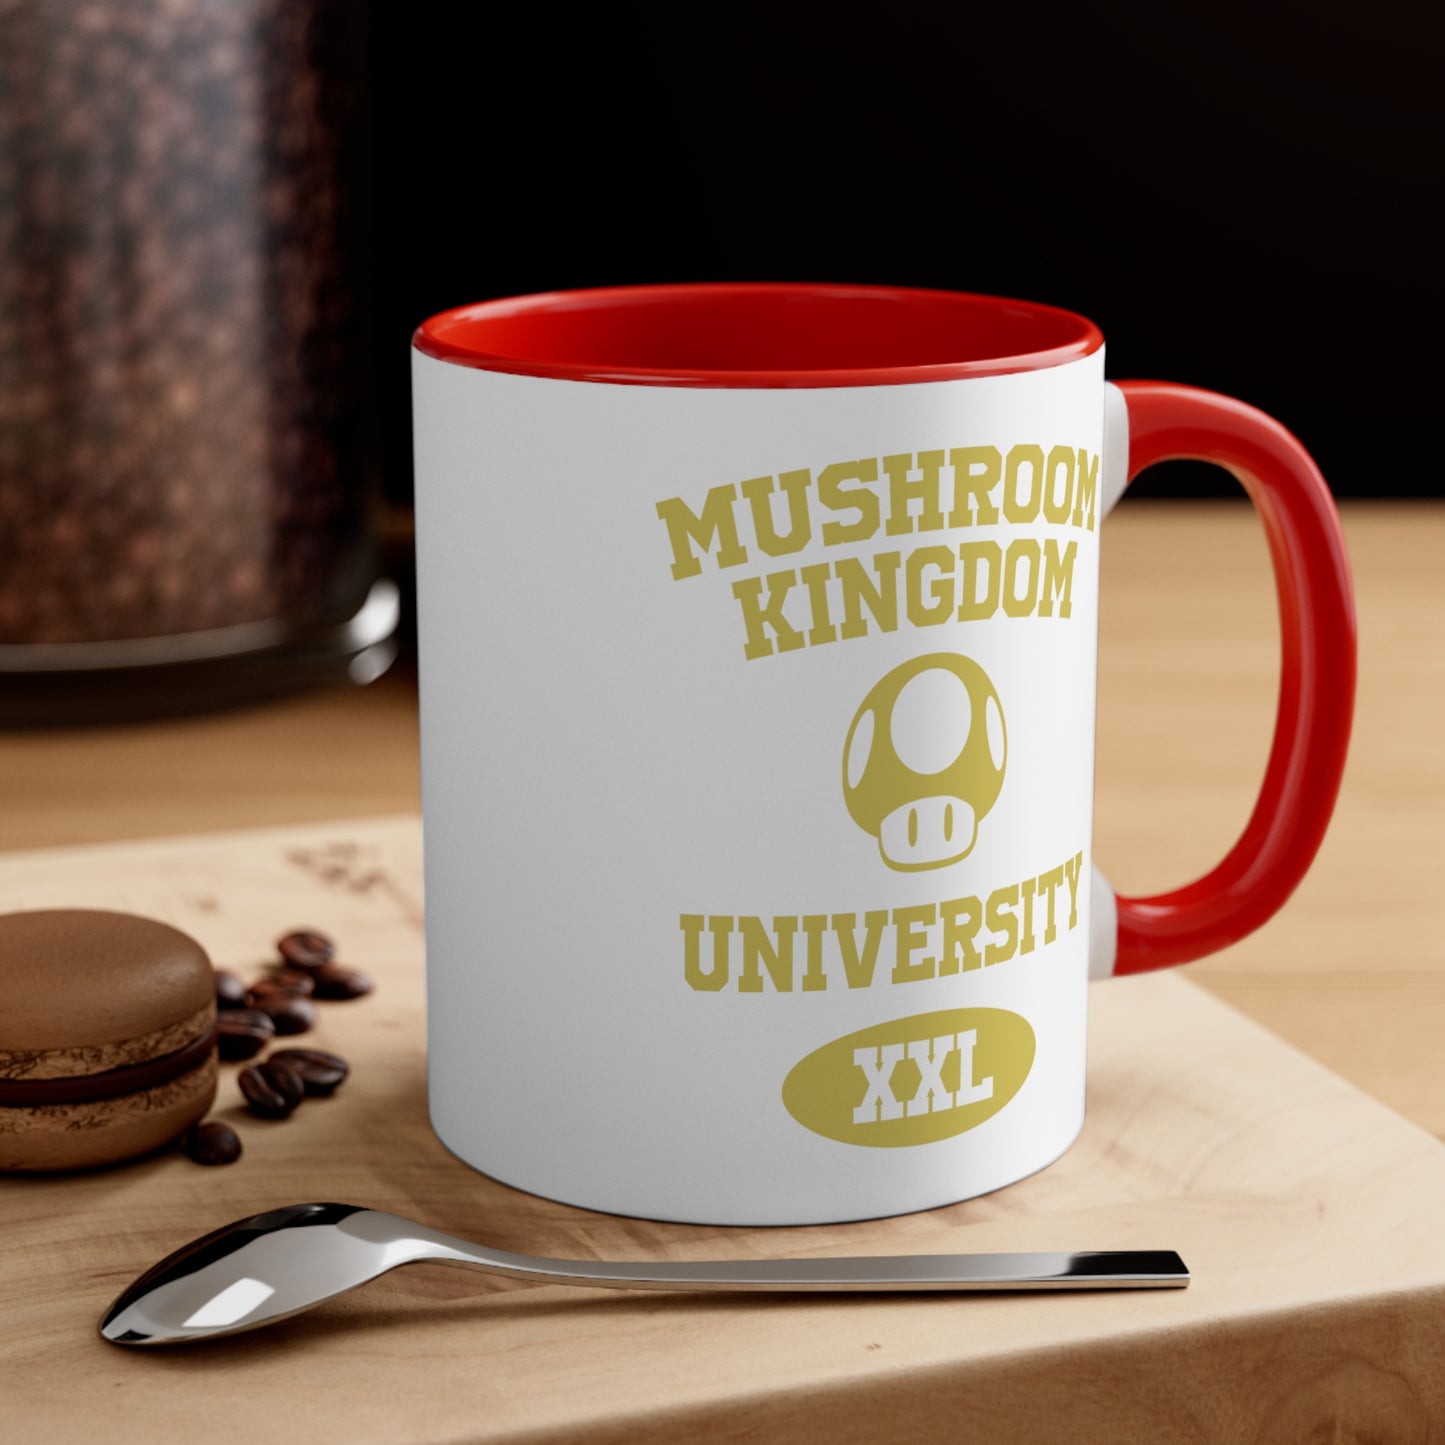 Mushroom Kingdom University Mug, 11oz